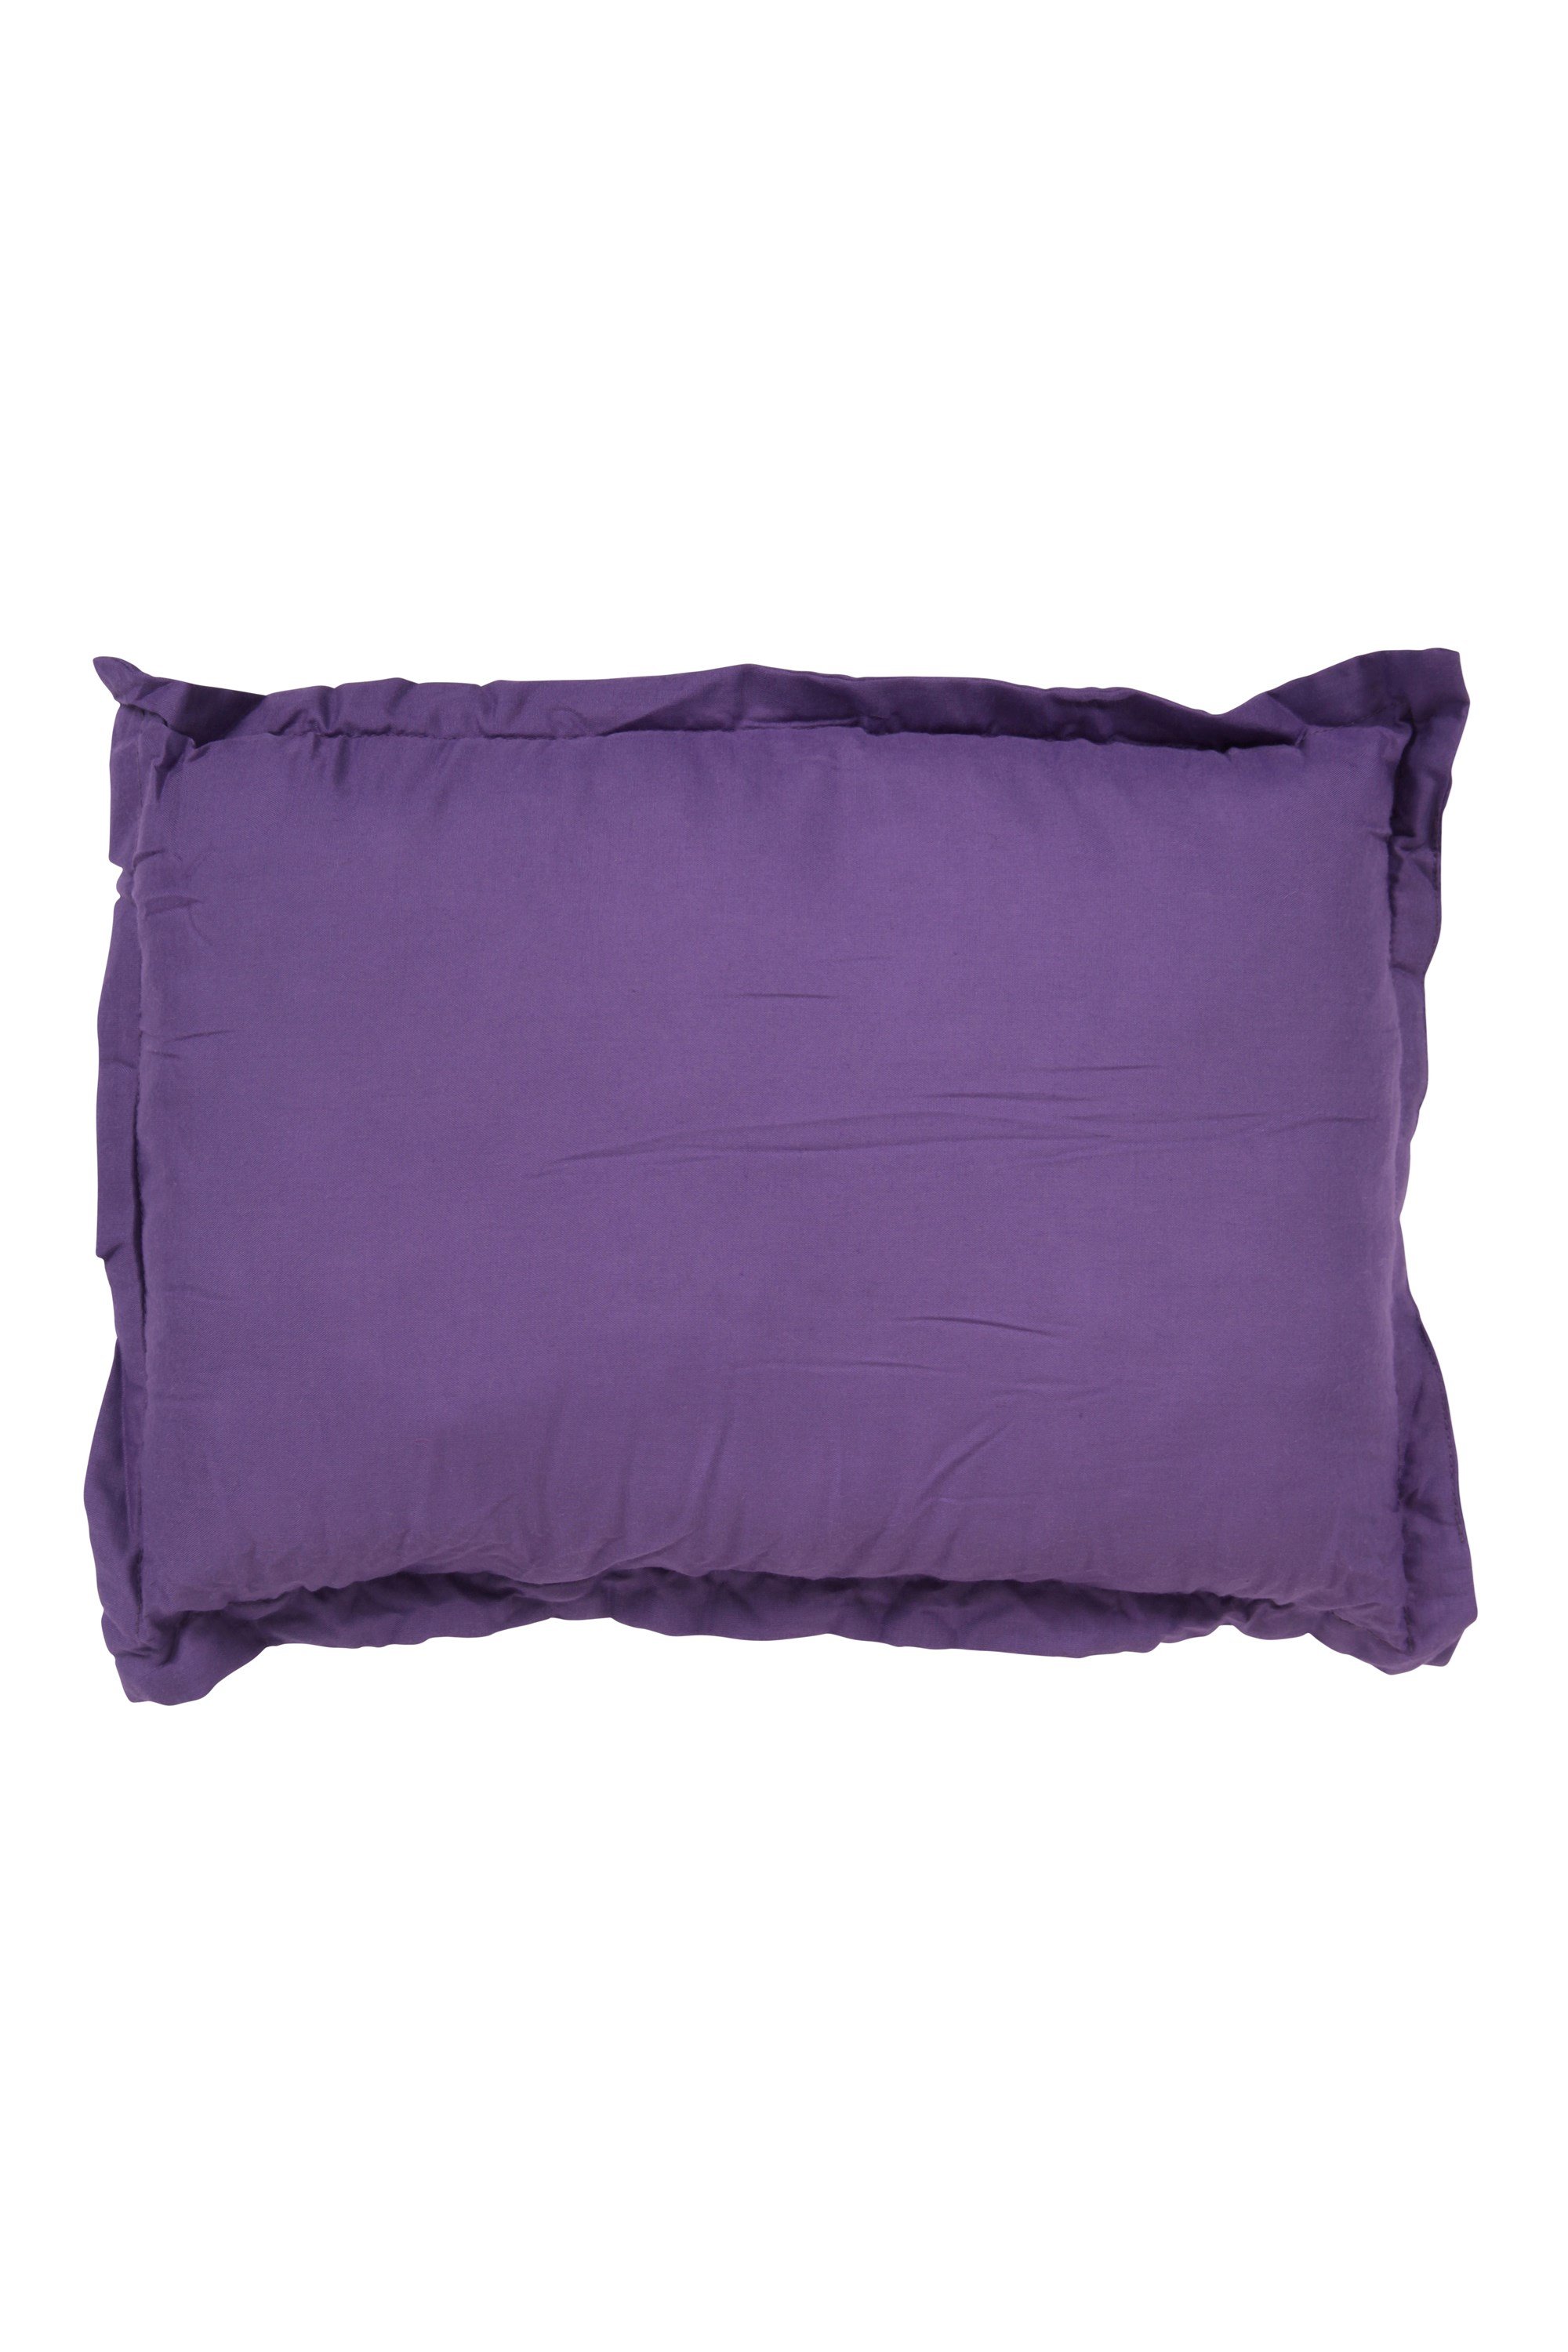 Travel Pillow - Purple